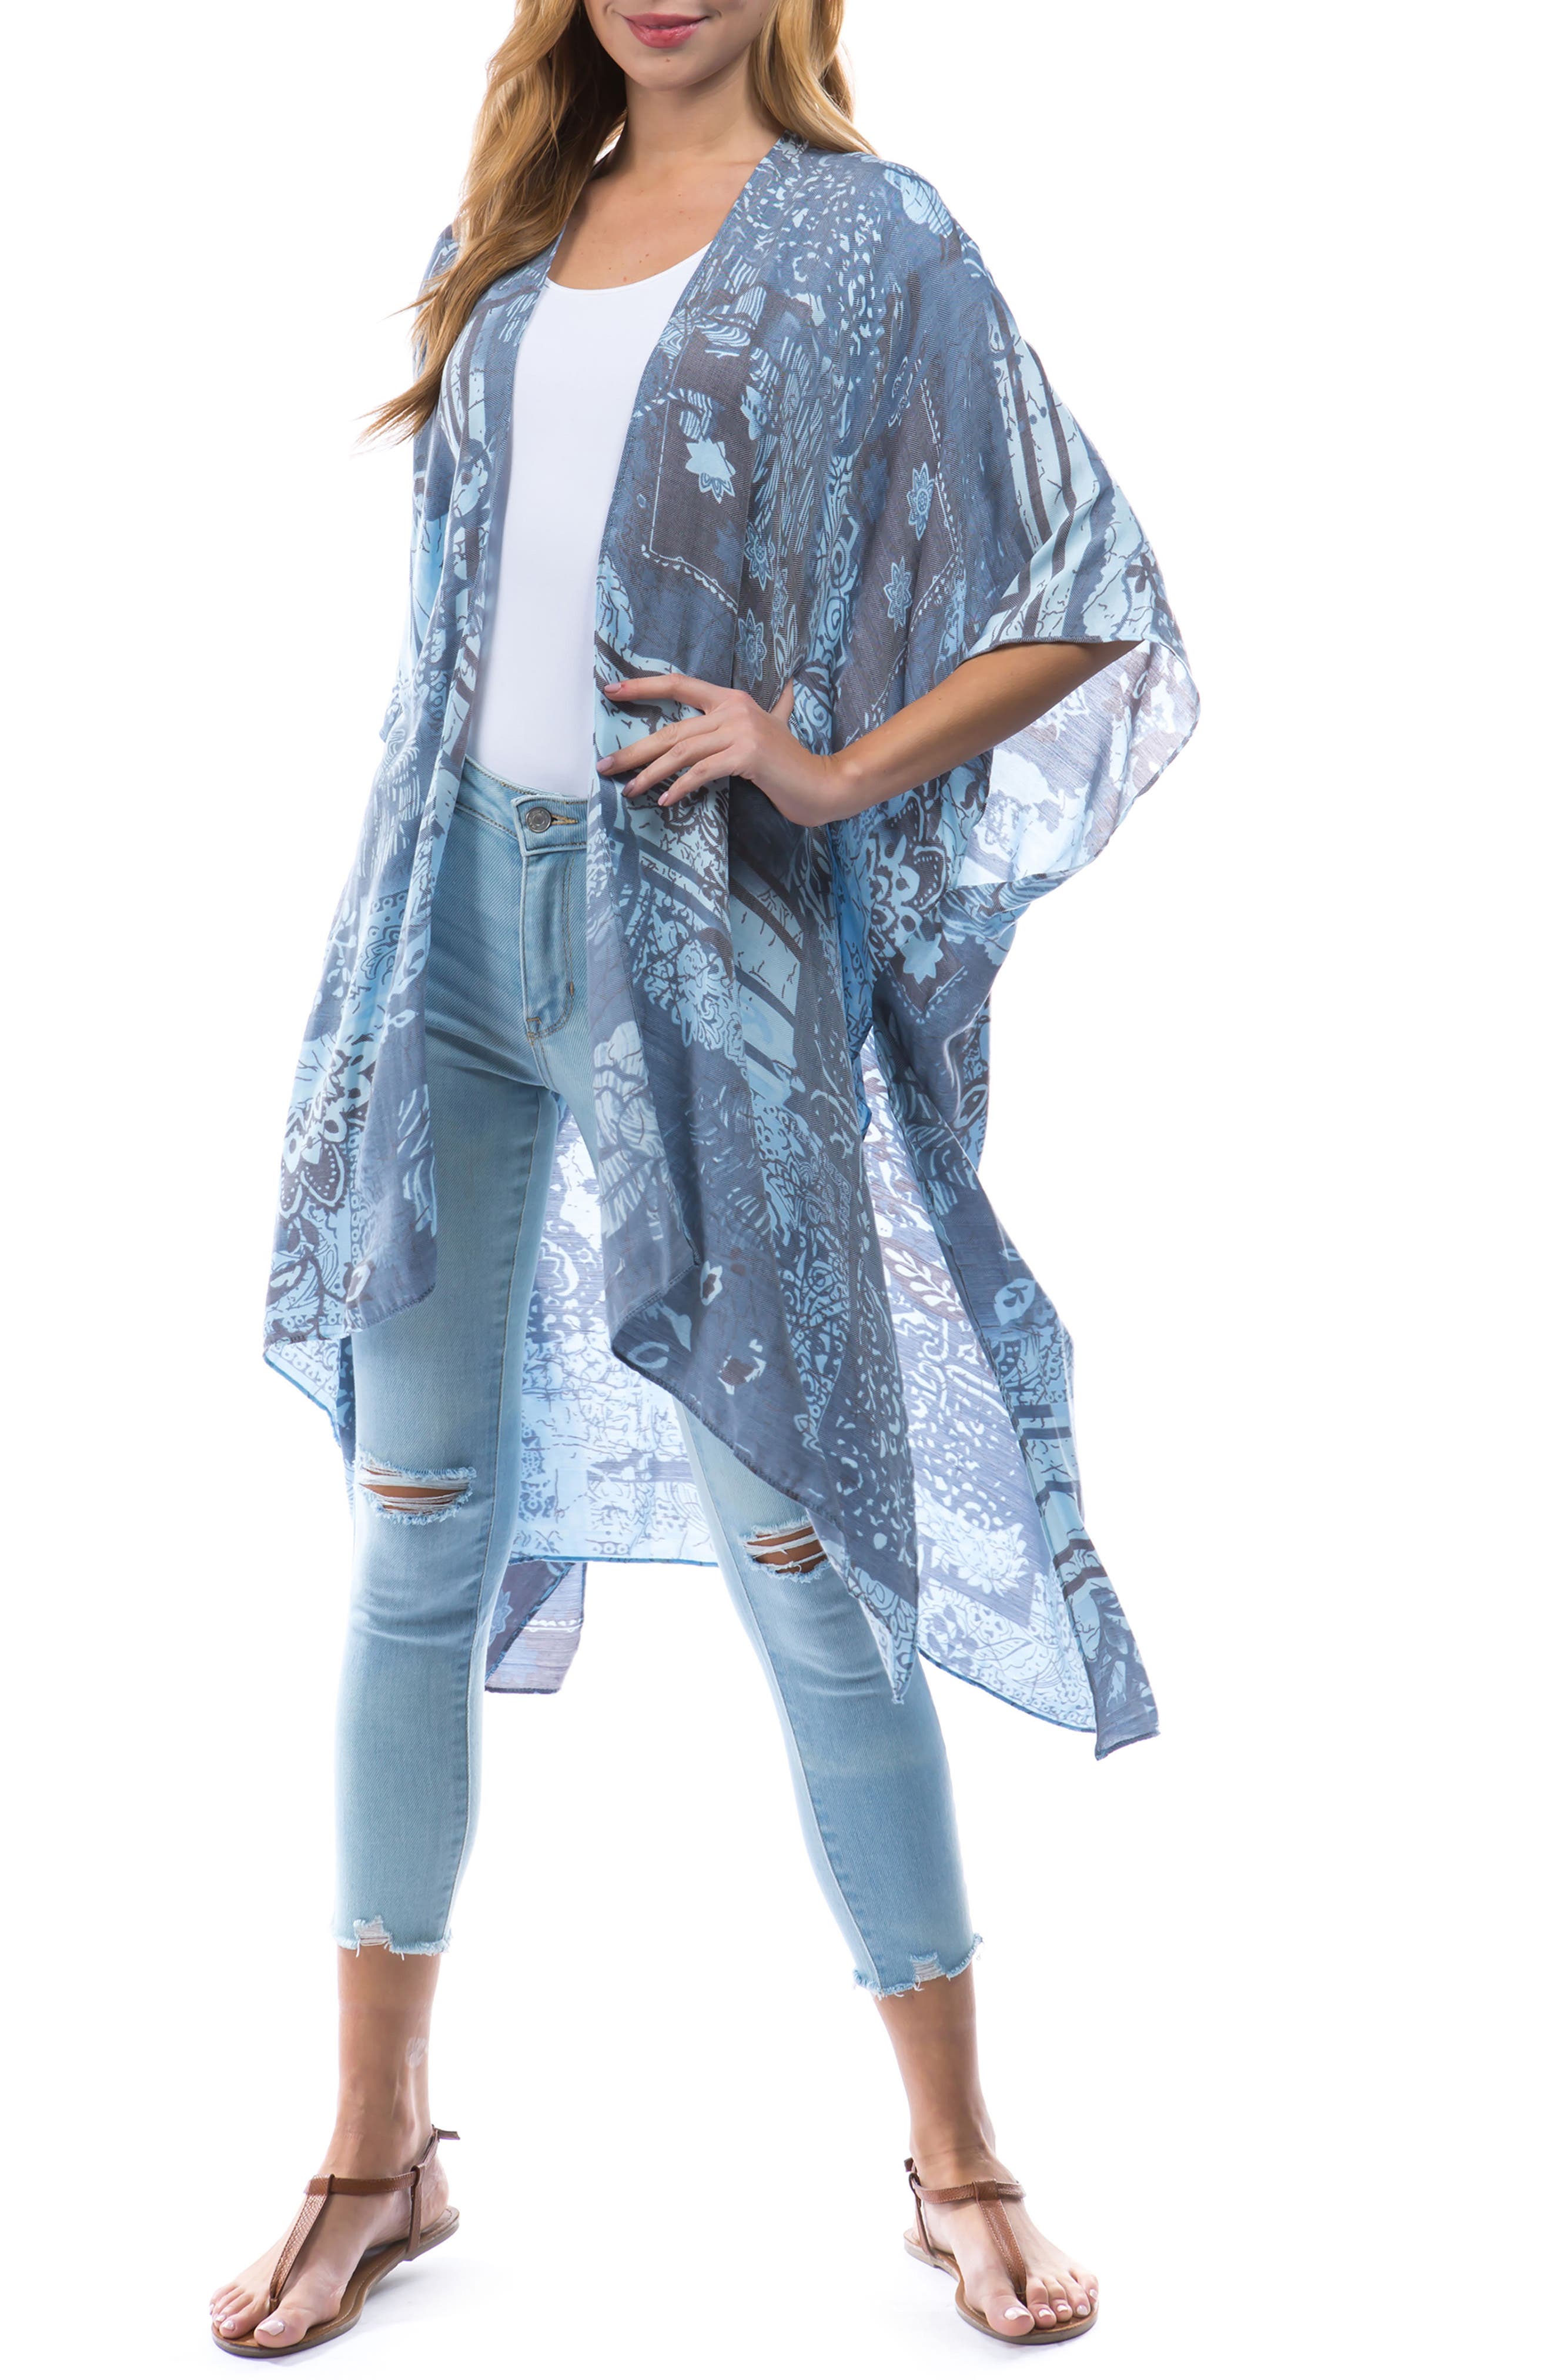 Marcus Adler Mixed Print Ruana Kimono In Blue